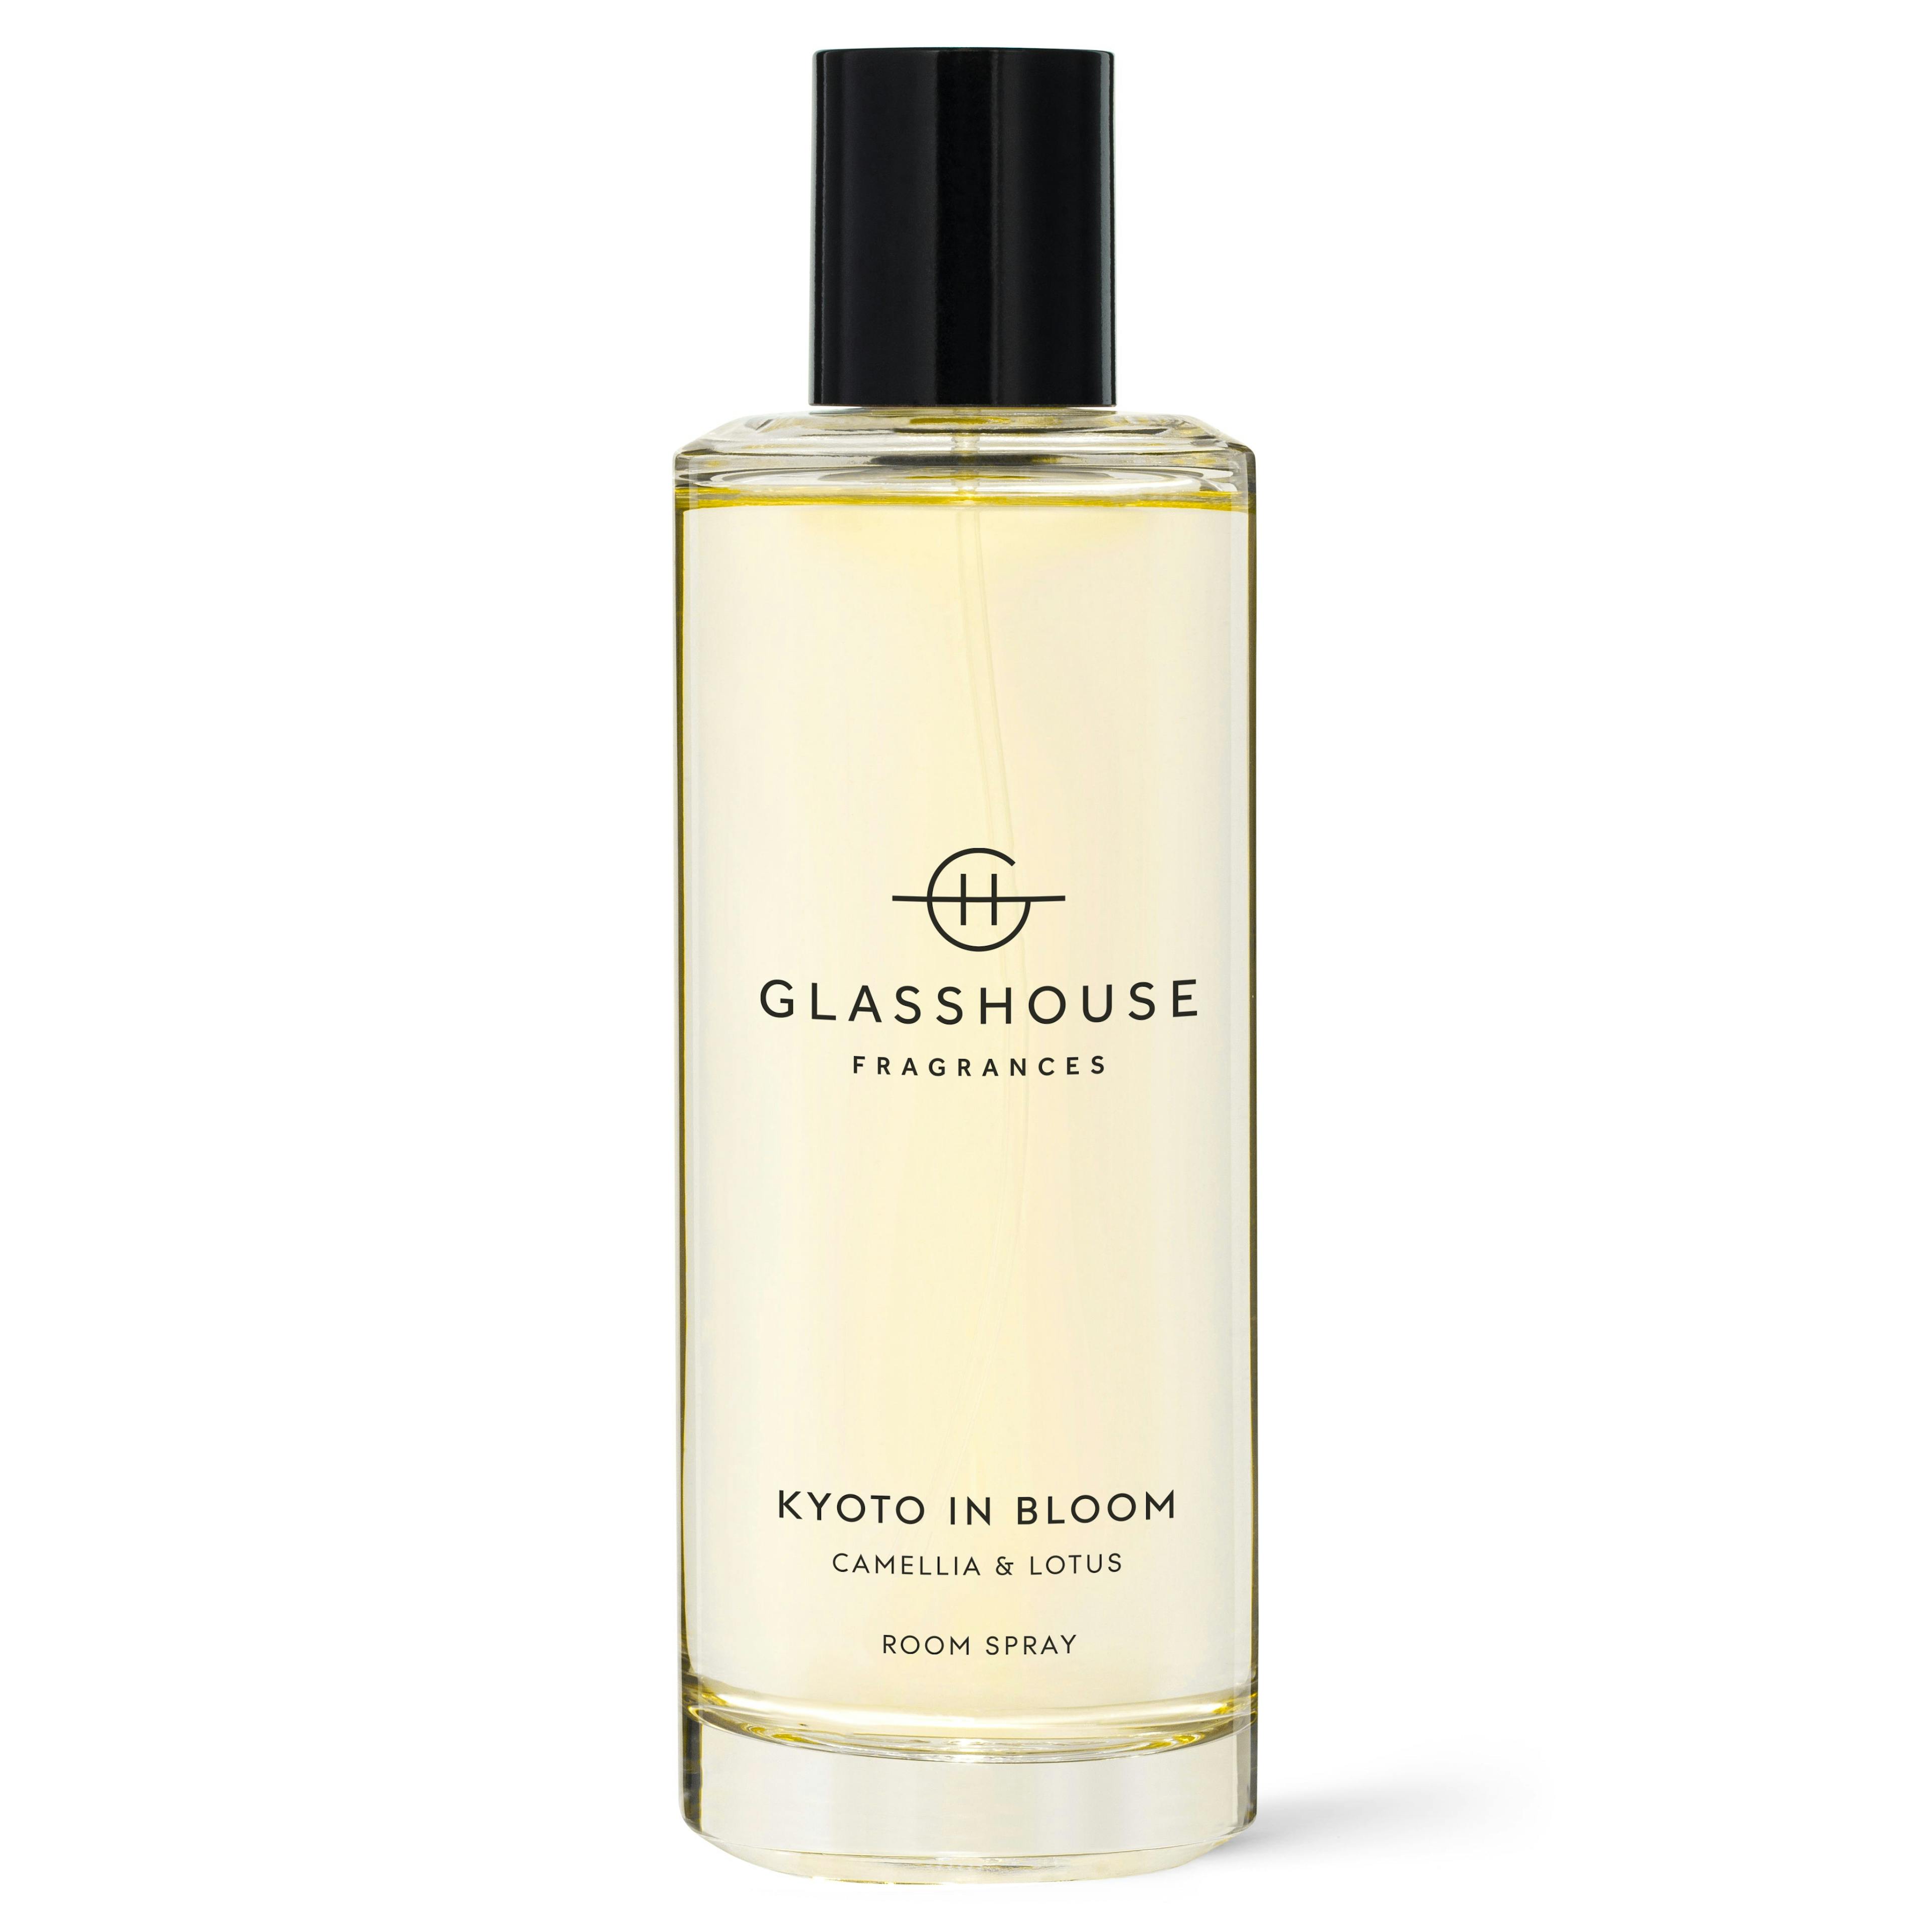 Glasshouse Fragrances Interior Fragrance 150ml - KYOTO IN BLOOM